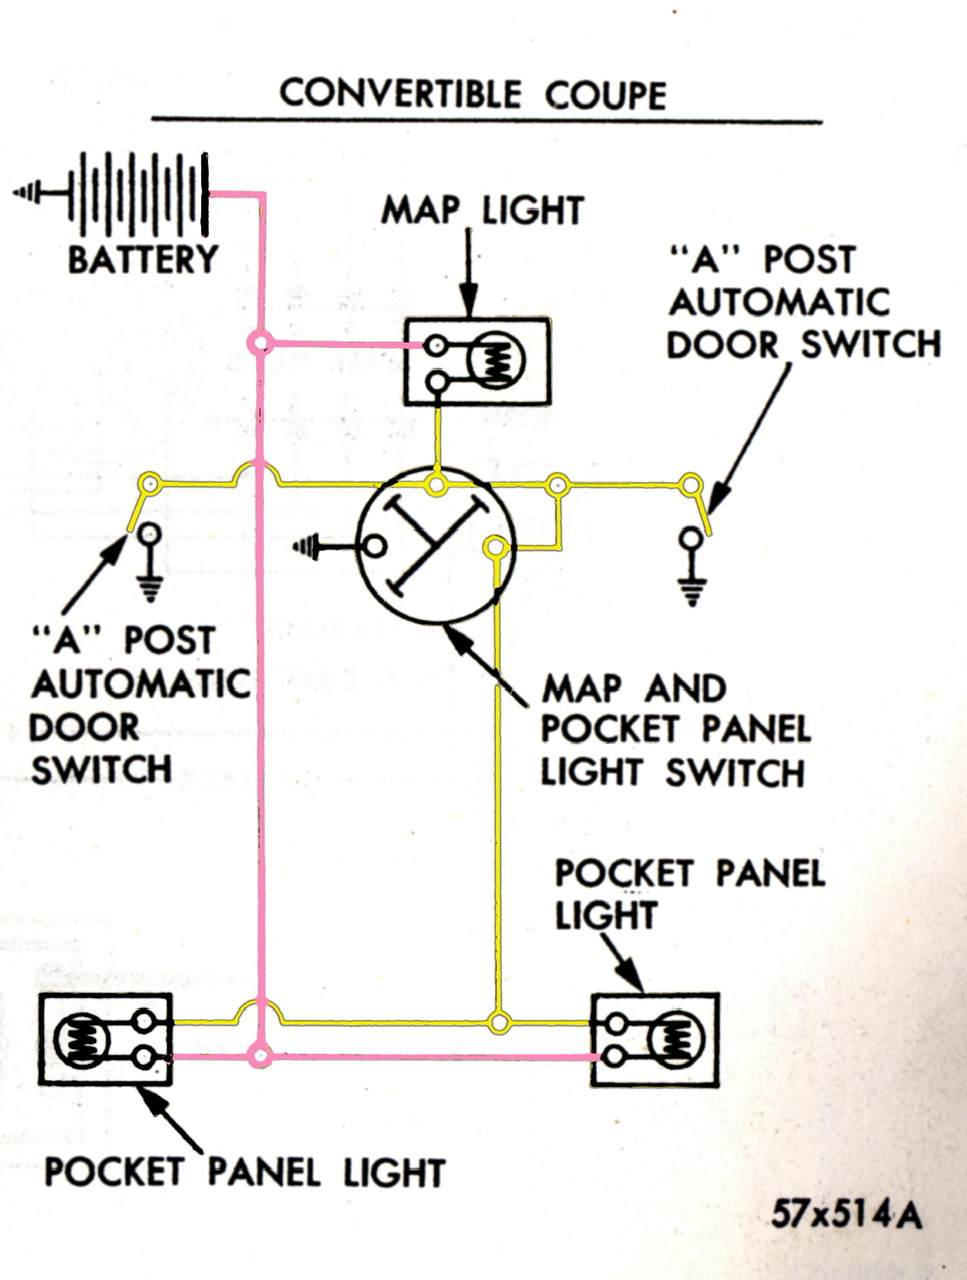 Pocket Panel Lighting Schematic - Copy.jpg